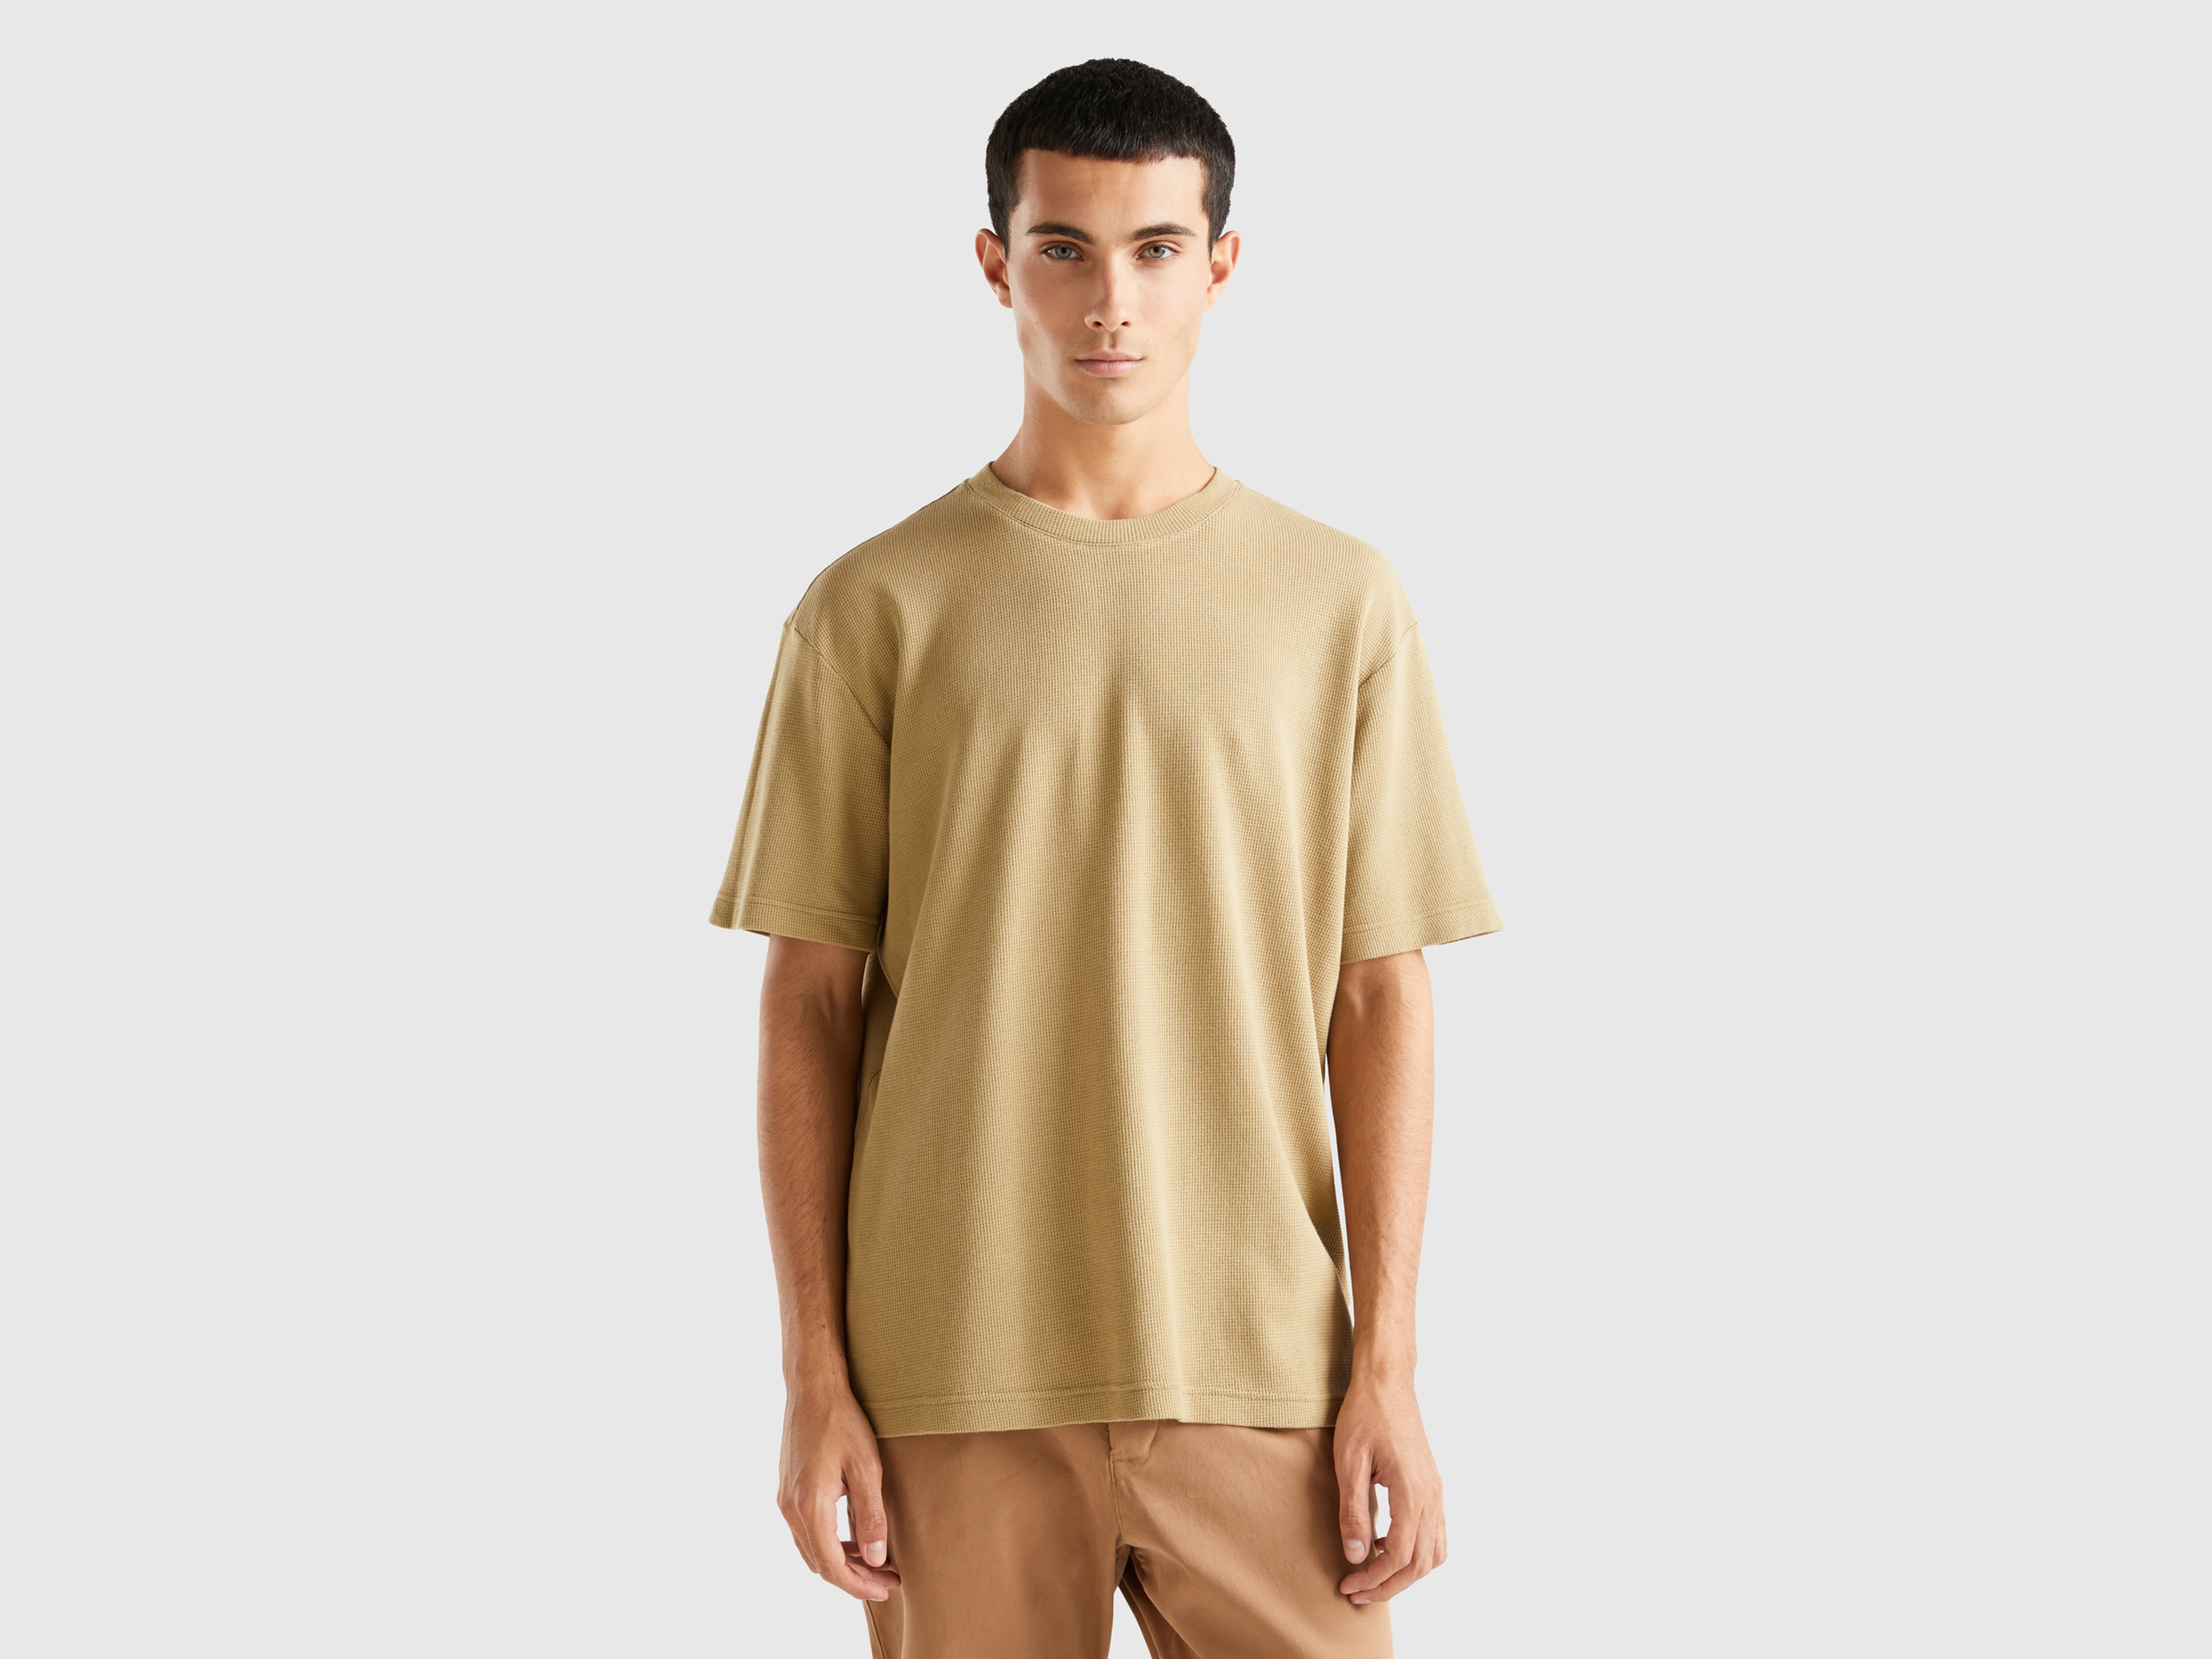 Benetton, Relaxed Fit T-shirt, size S, Beige, Men